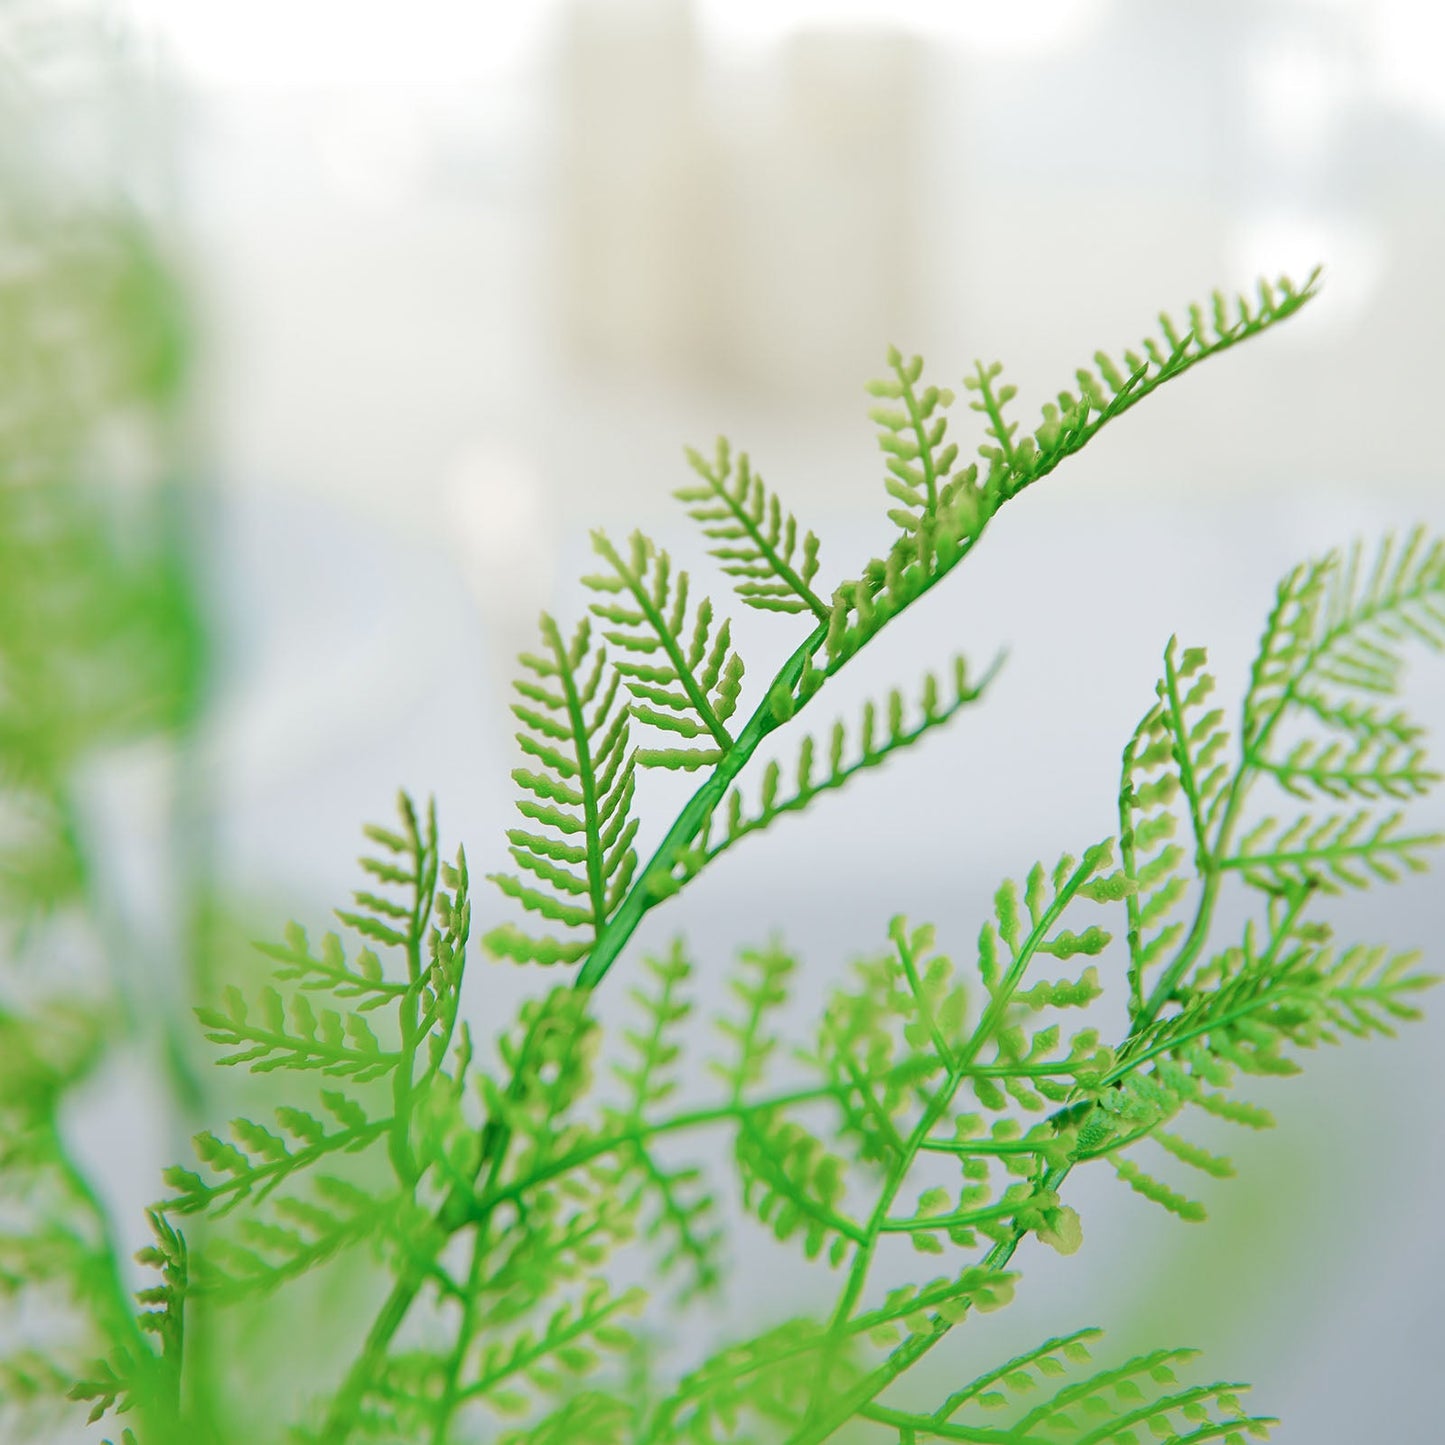 2 Stems Green Artificial Asparagus Fern Leaf Plant Indoor Faux Spray